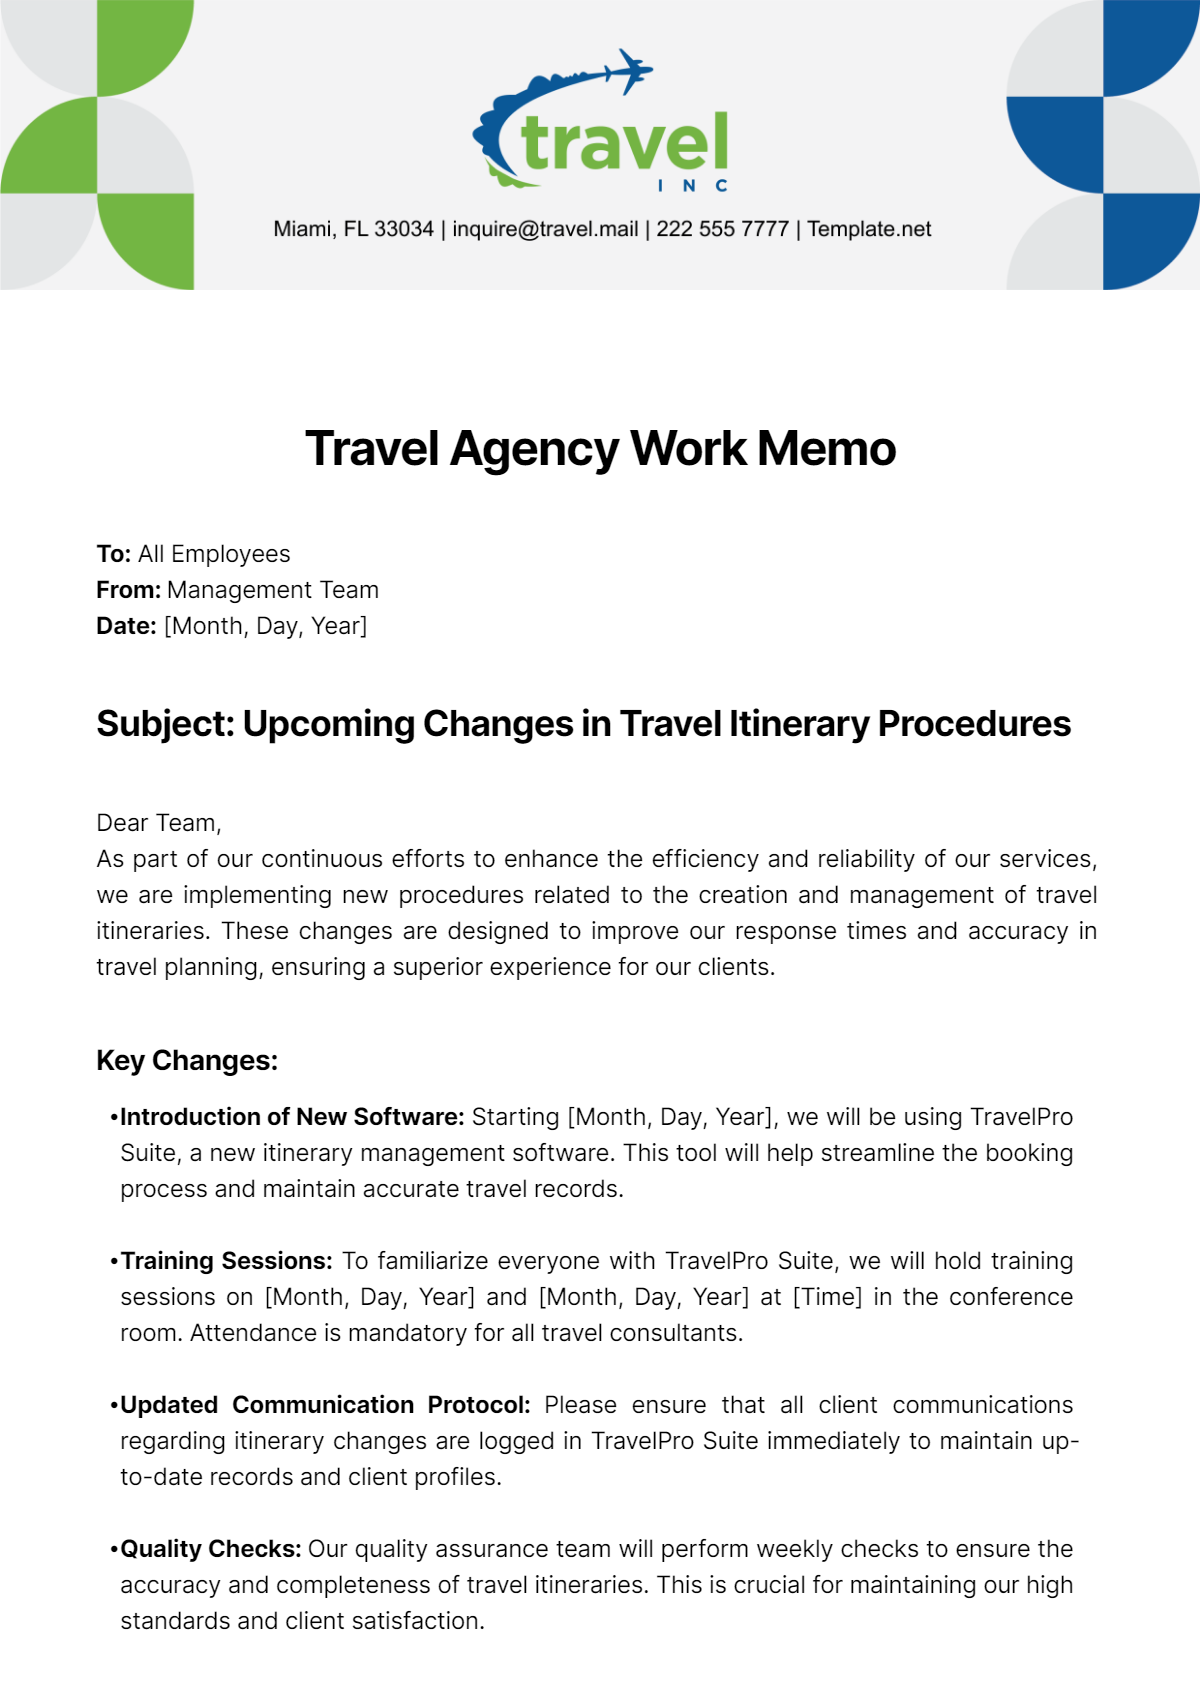 Free Travel Agency Work Memo Template